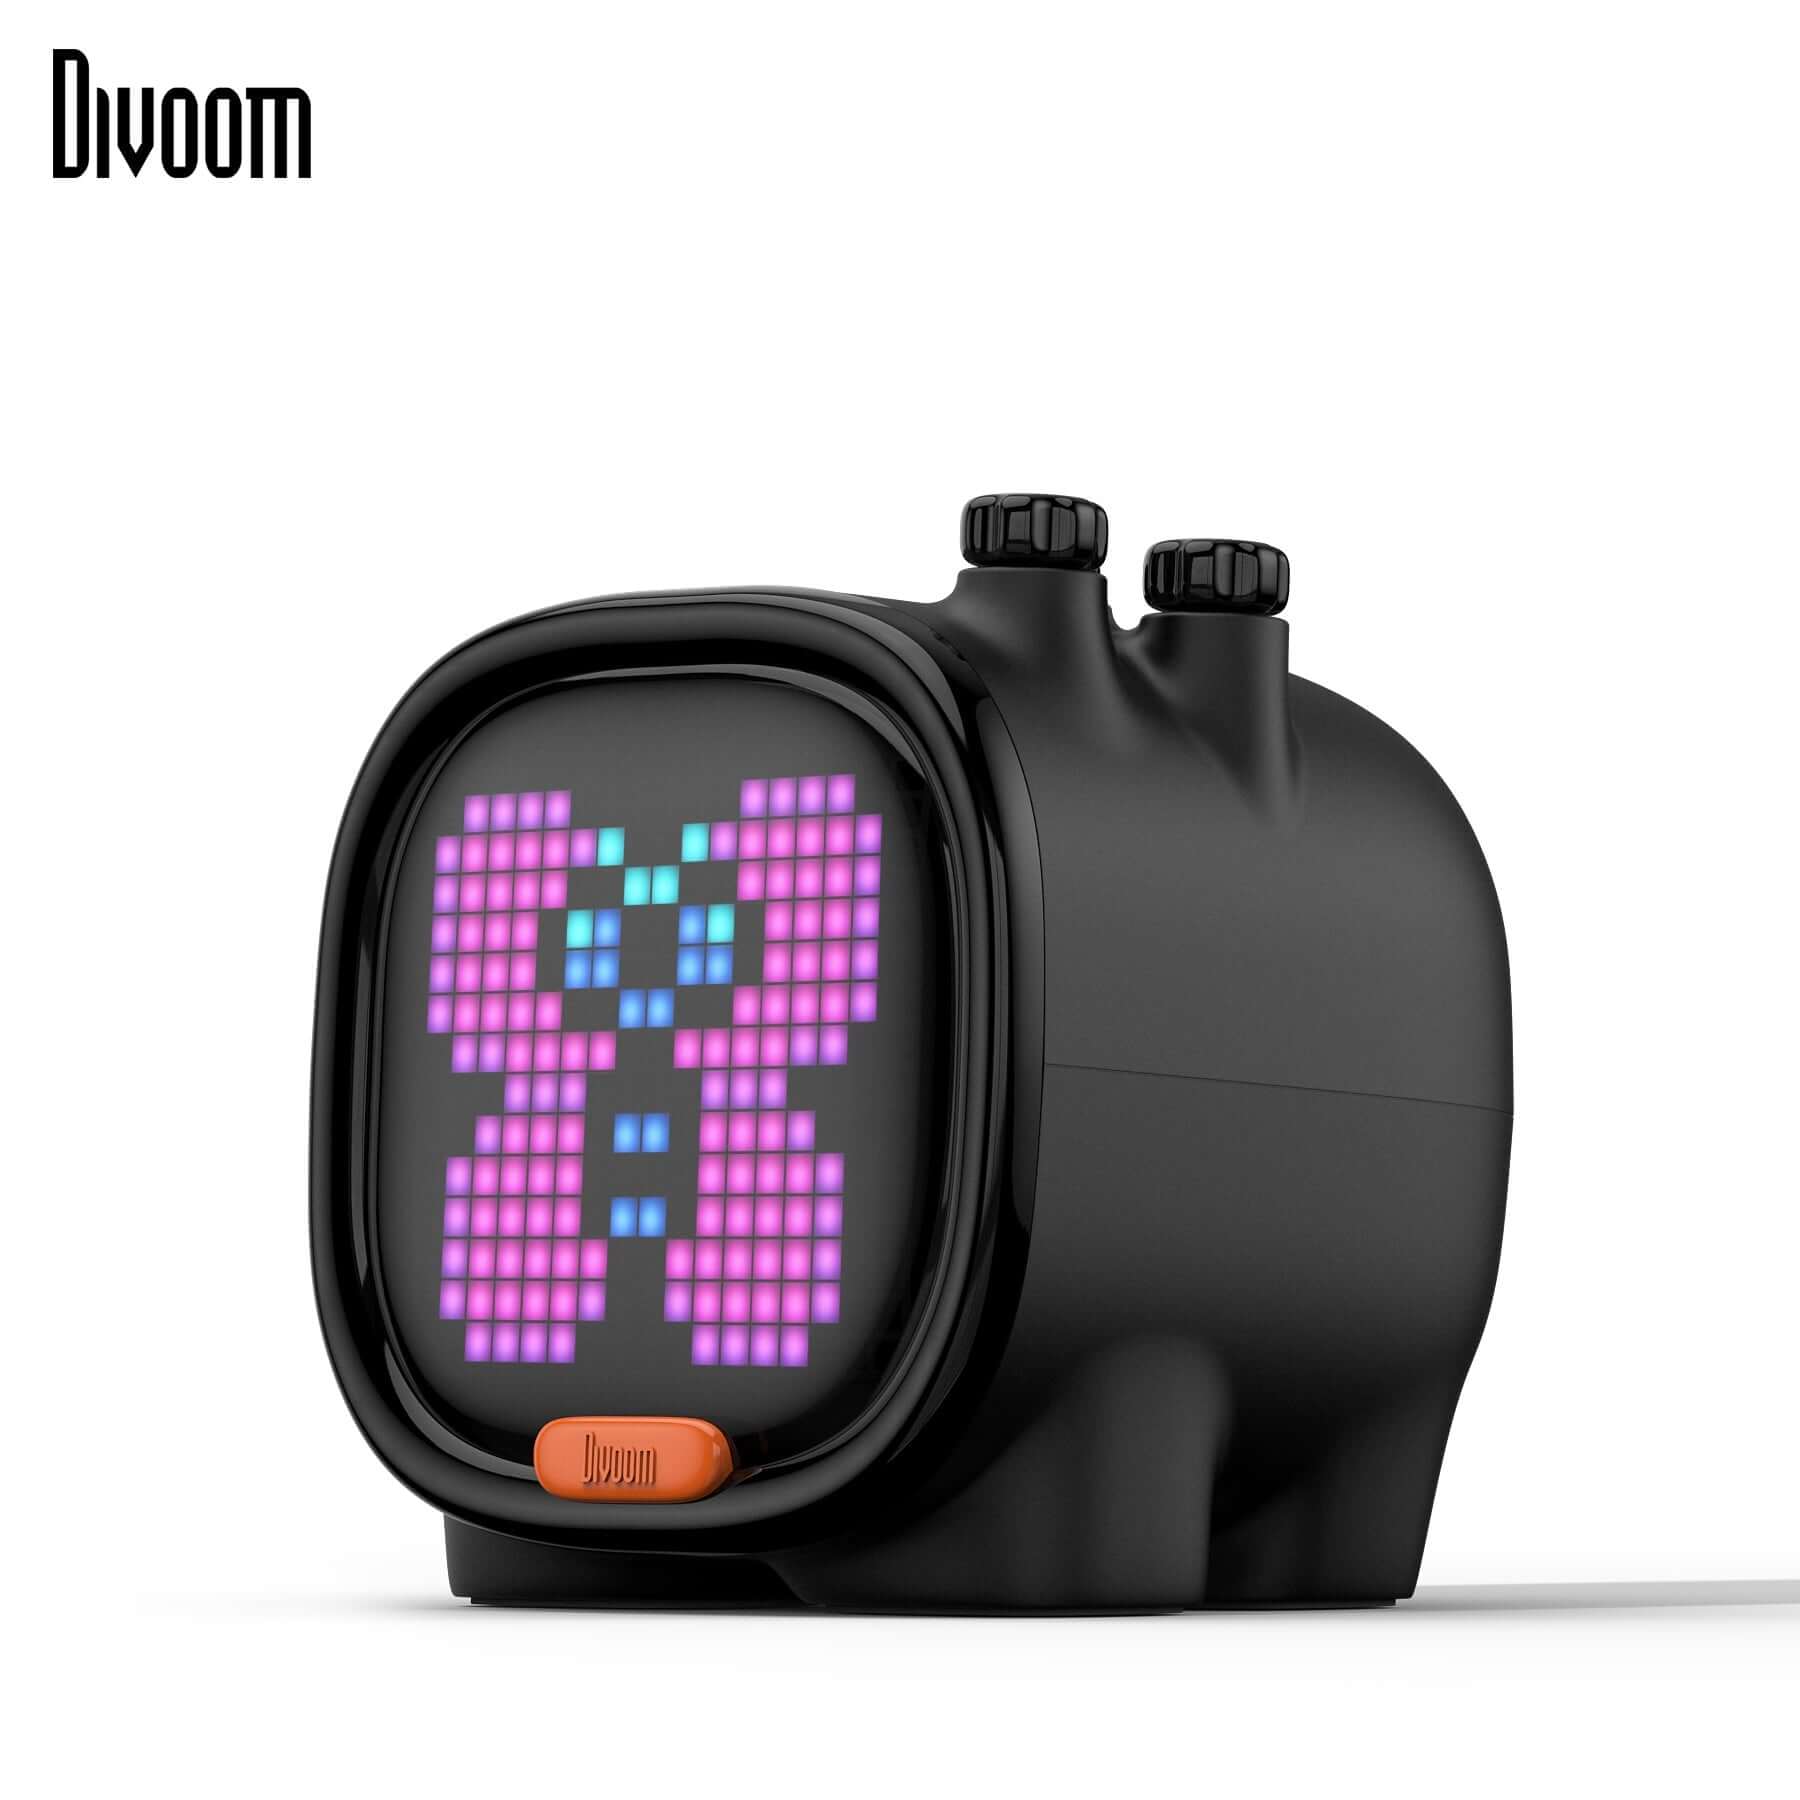 Divoom Pixel Art Bluetooth Speaker Alarm Clock for IOS Android Phone